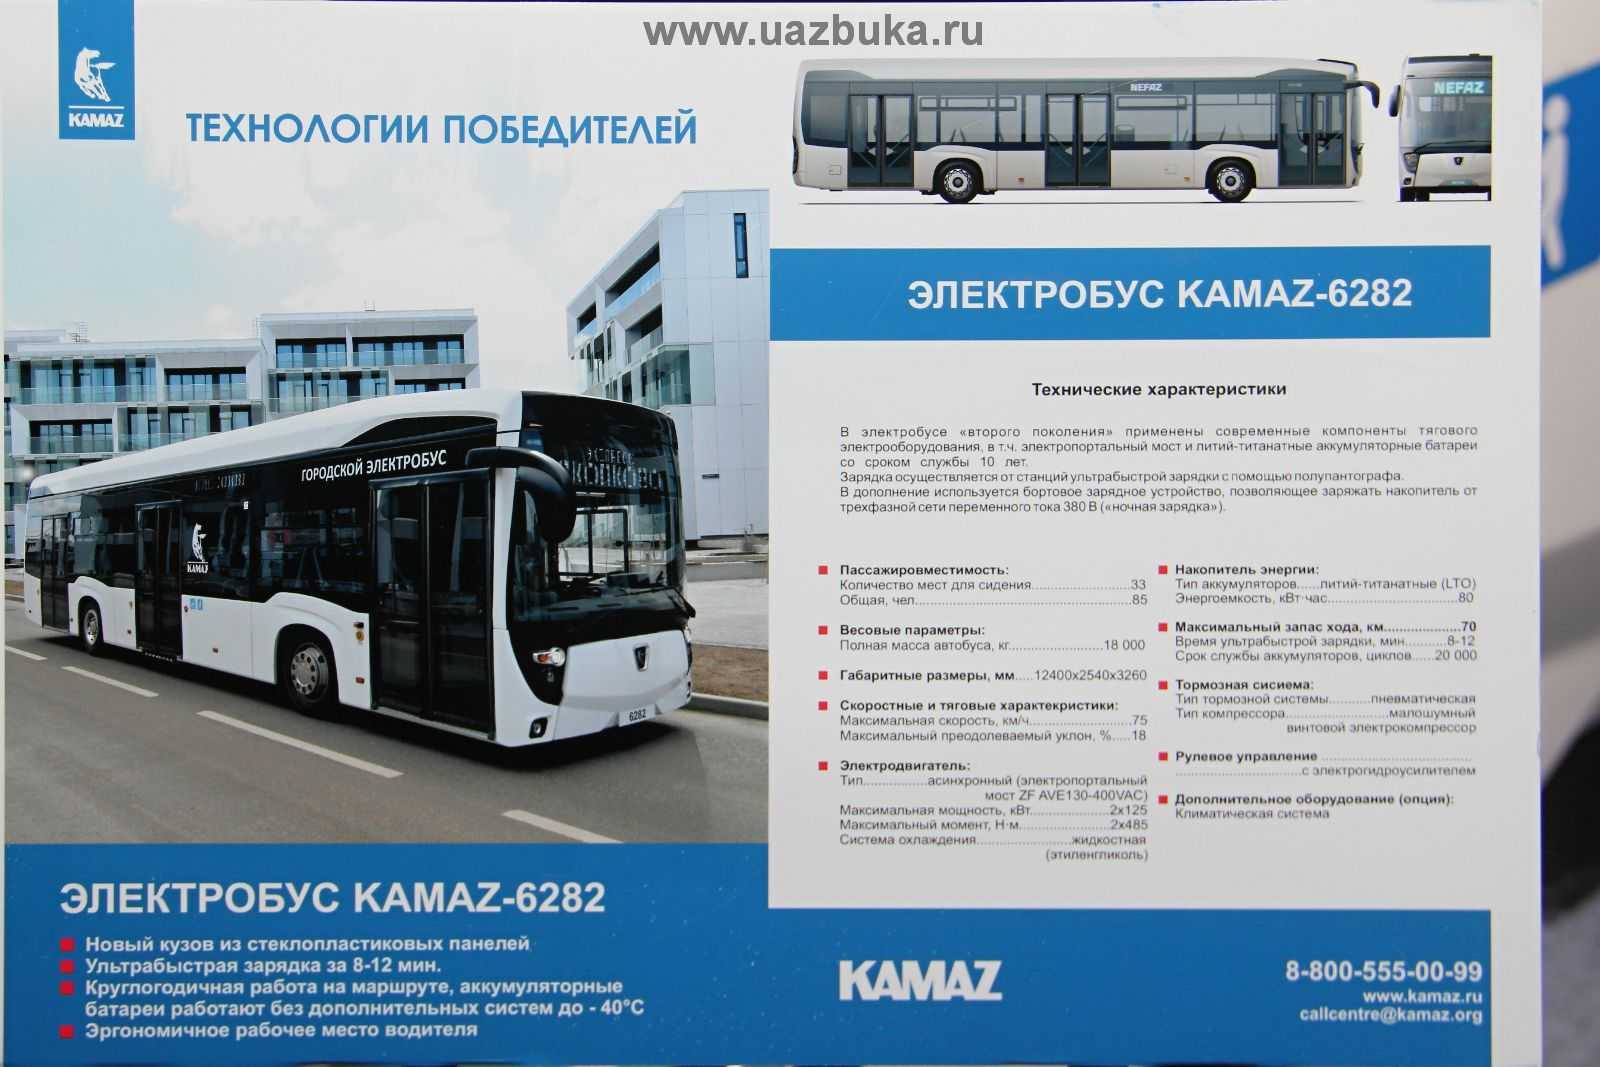 Схема электробуса. ЛИАЗ-6274 чертежи электробус. Электробус КАМАЗ-6282. Электробус КАМАЗ характеристики технические. Электробус КАМАЗ-6282 схема.